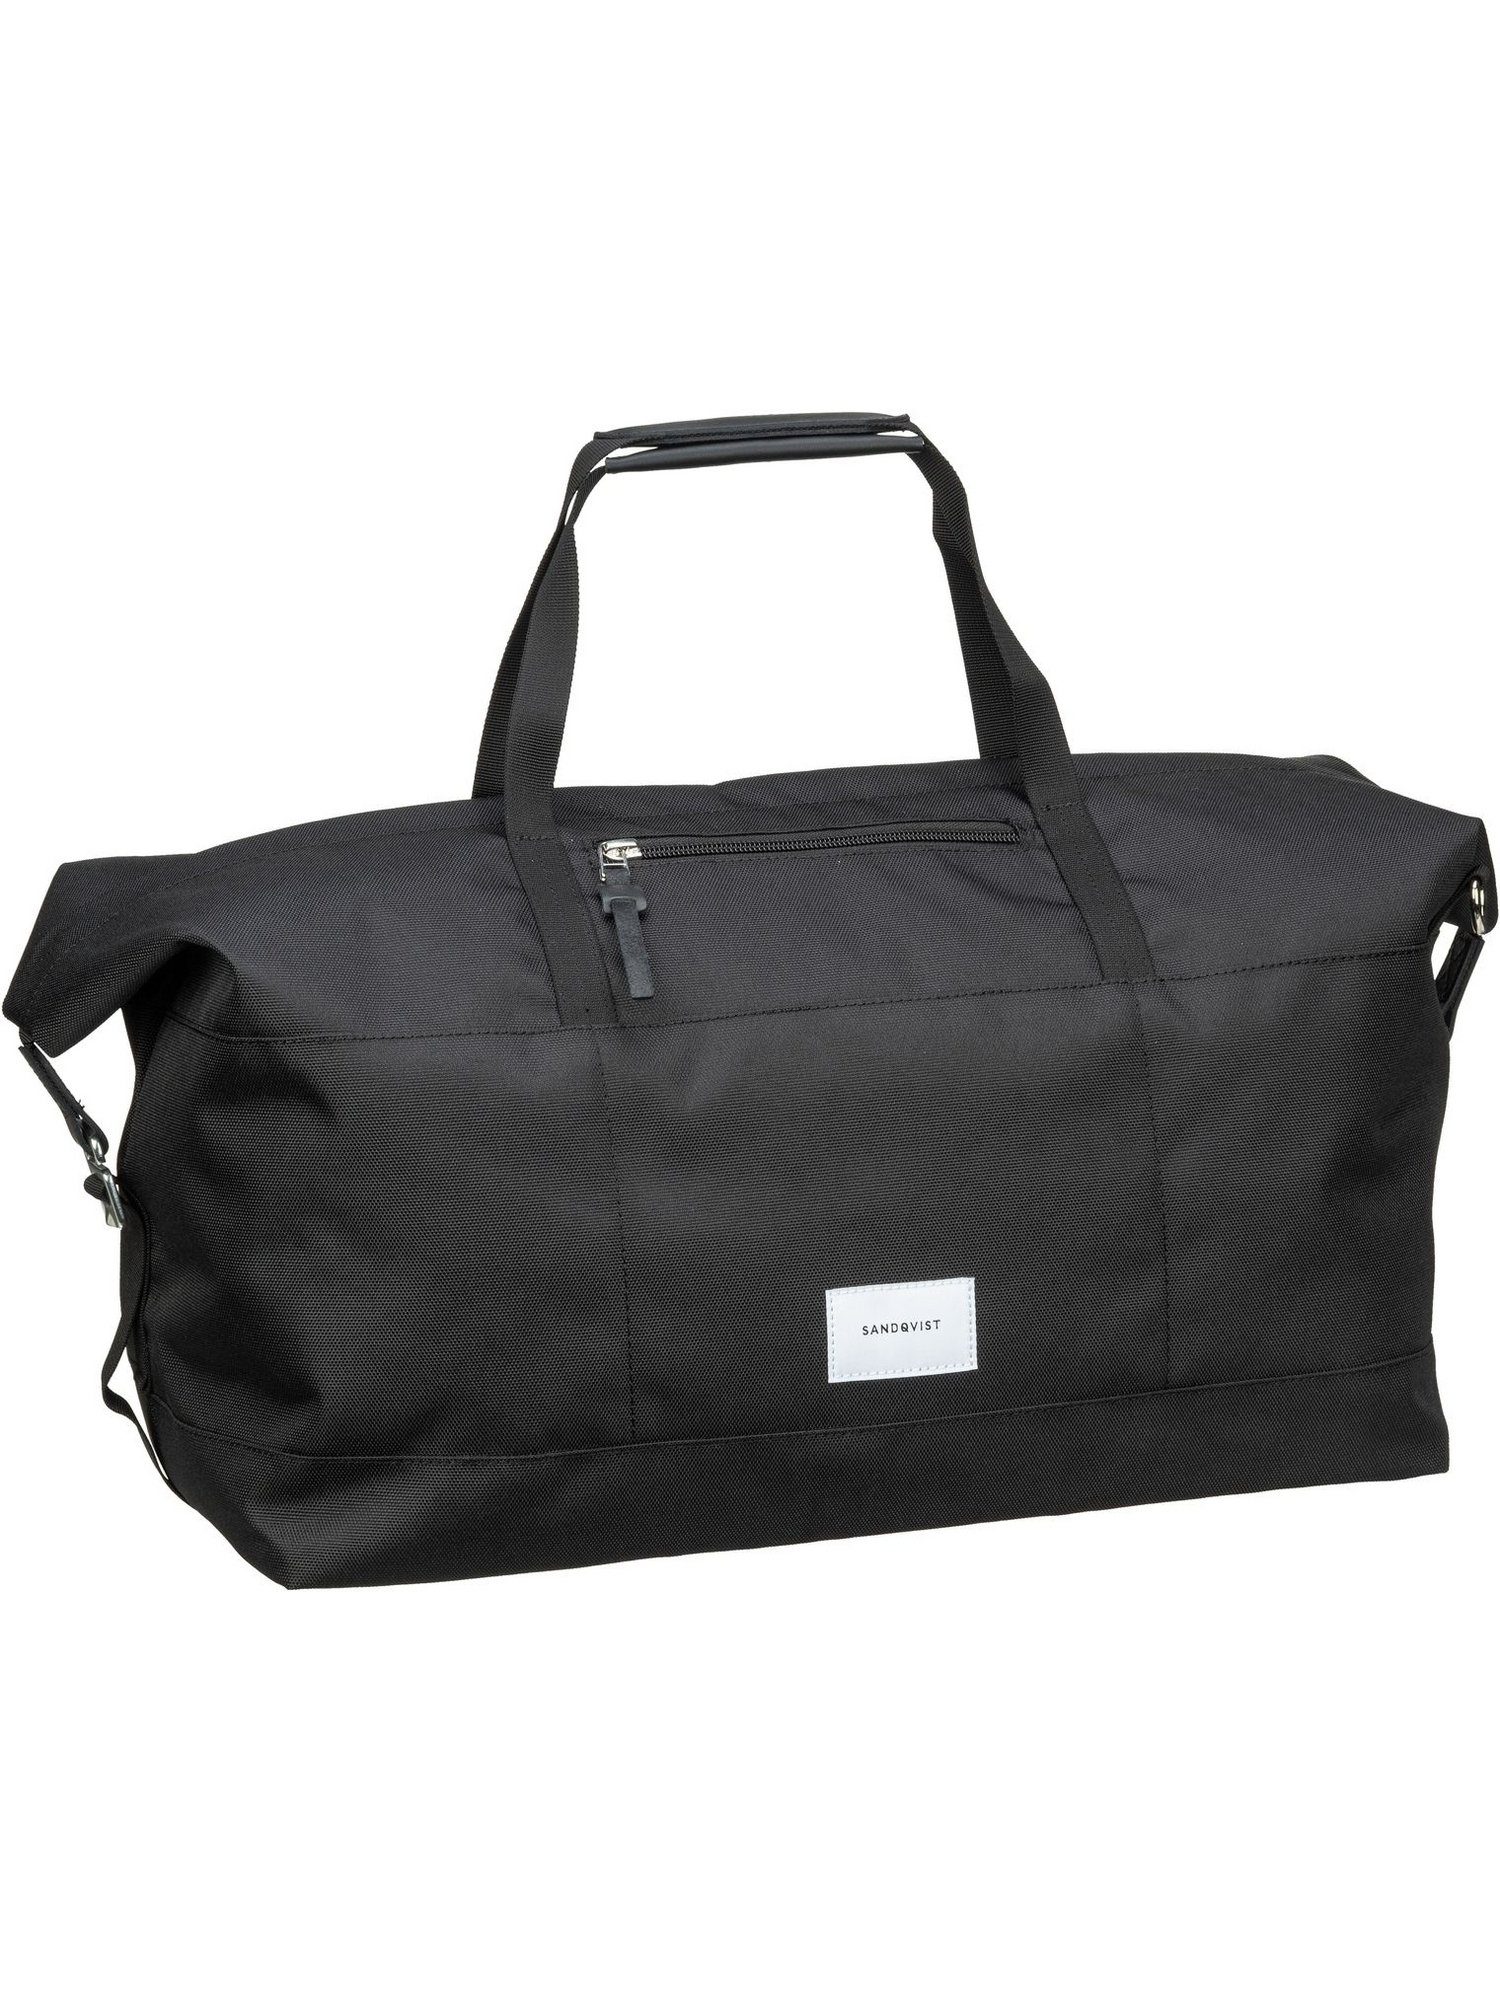 Sandqvist Небольшие сумки для поездок  Milton Небольшие сумки для поездок  Bag